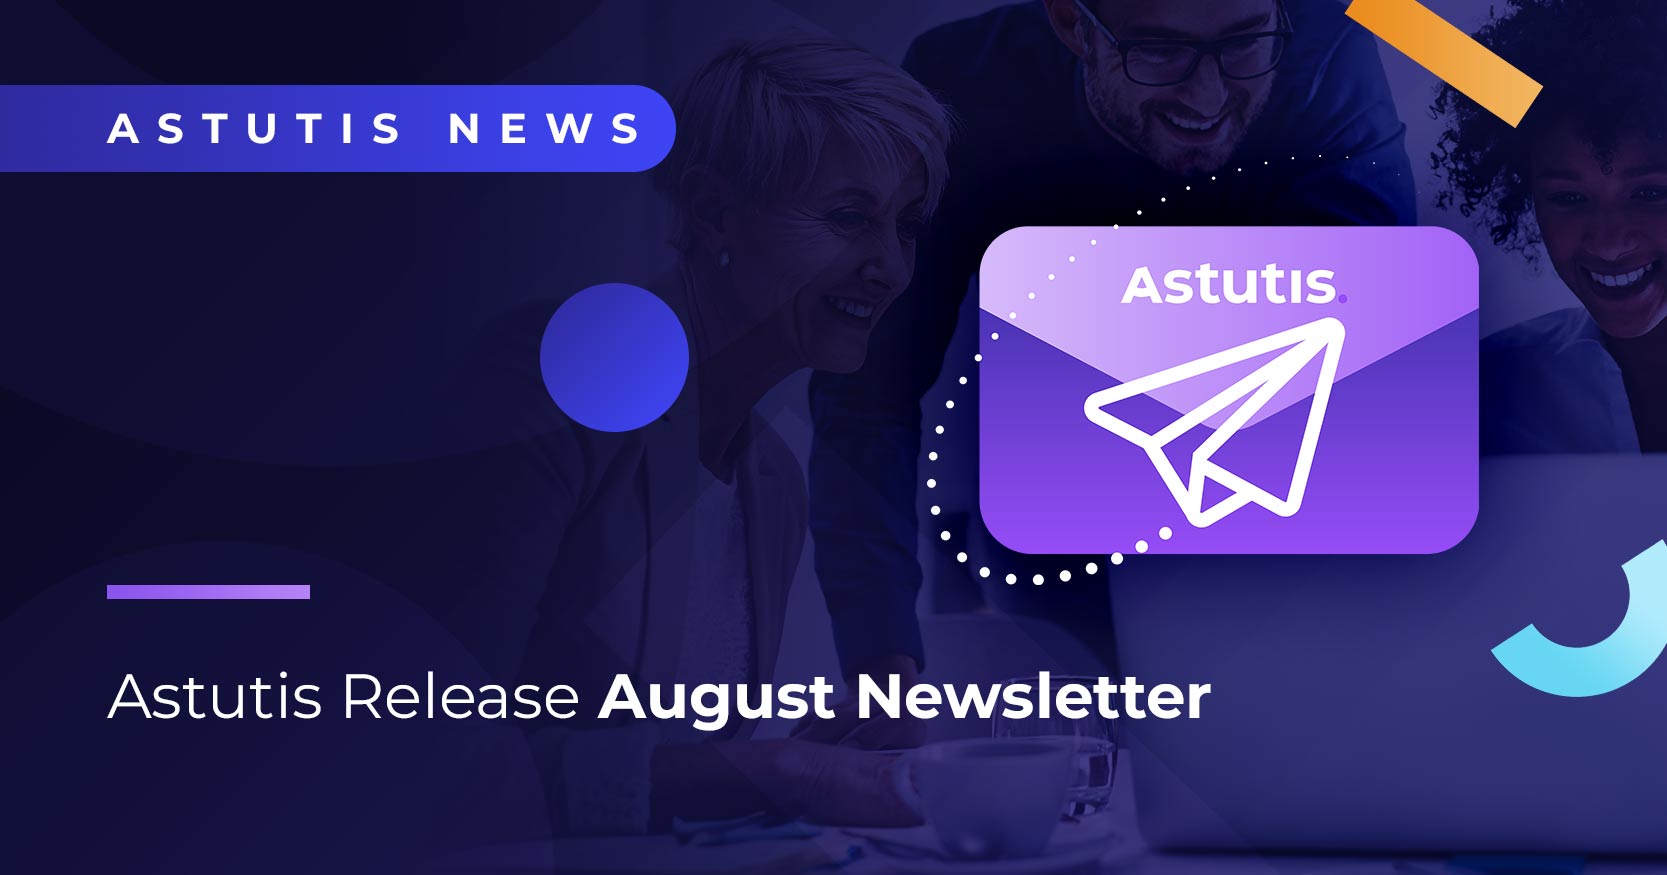 Astutis Release August Newsletter Image